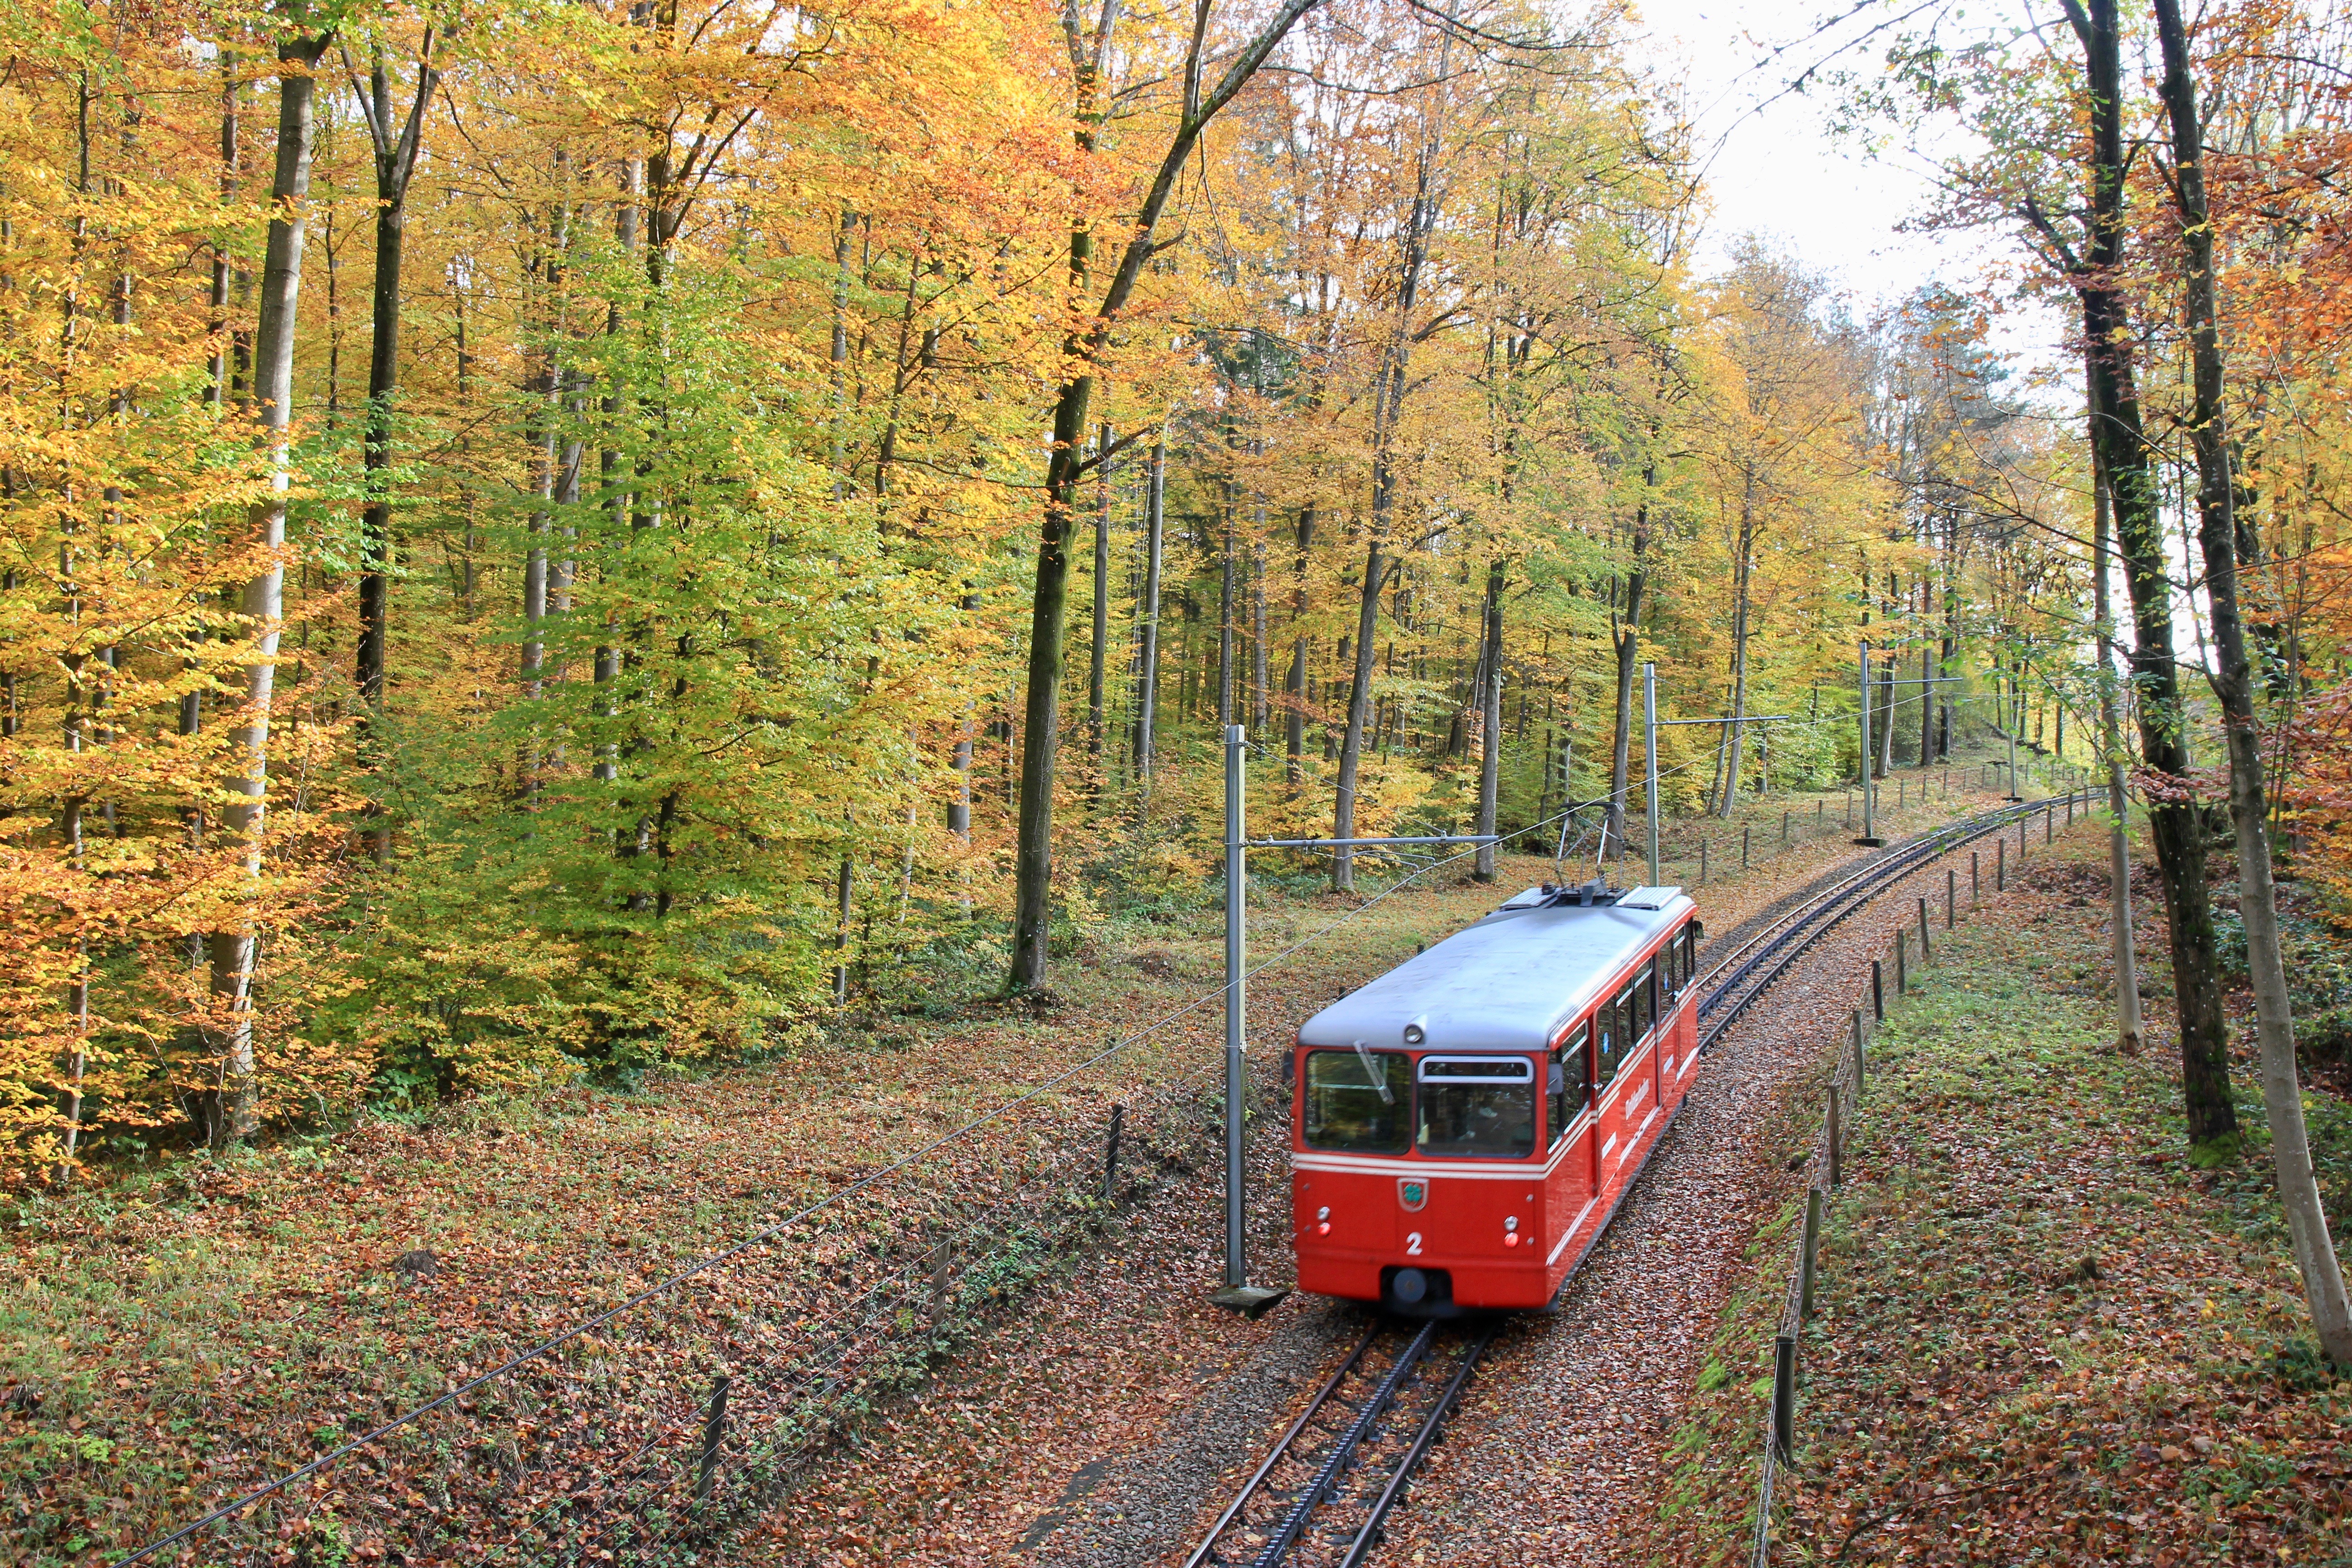 Zurigo in autunno